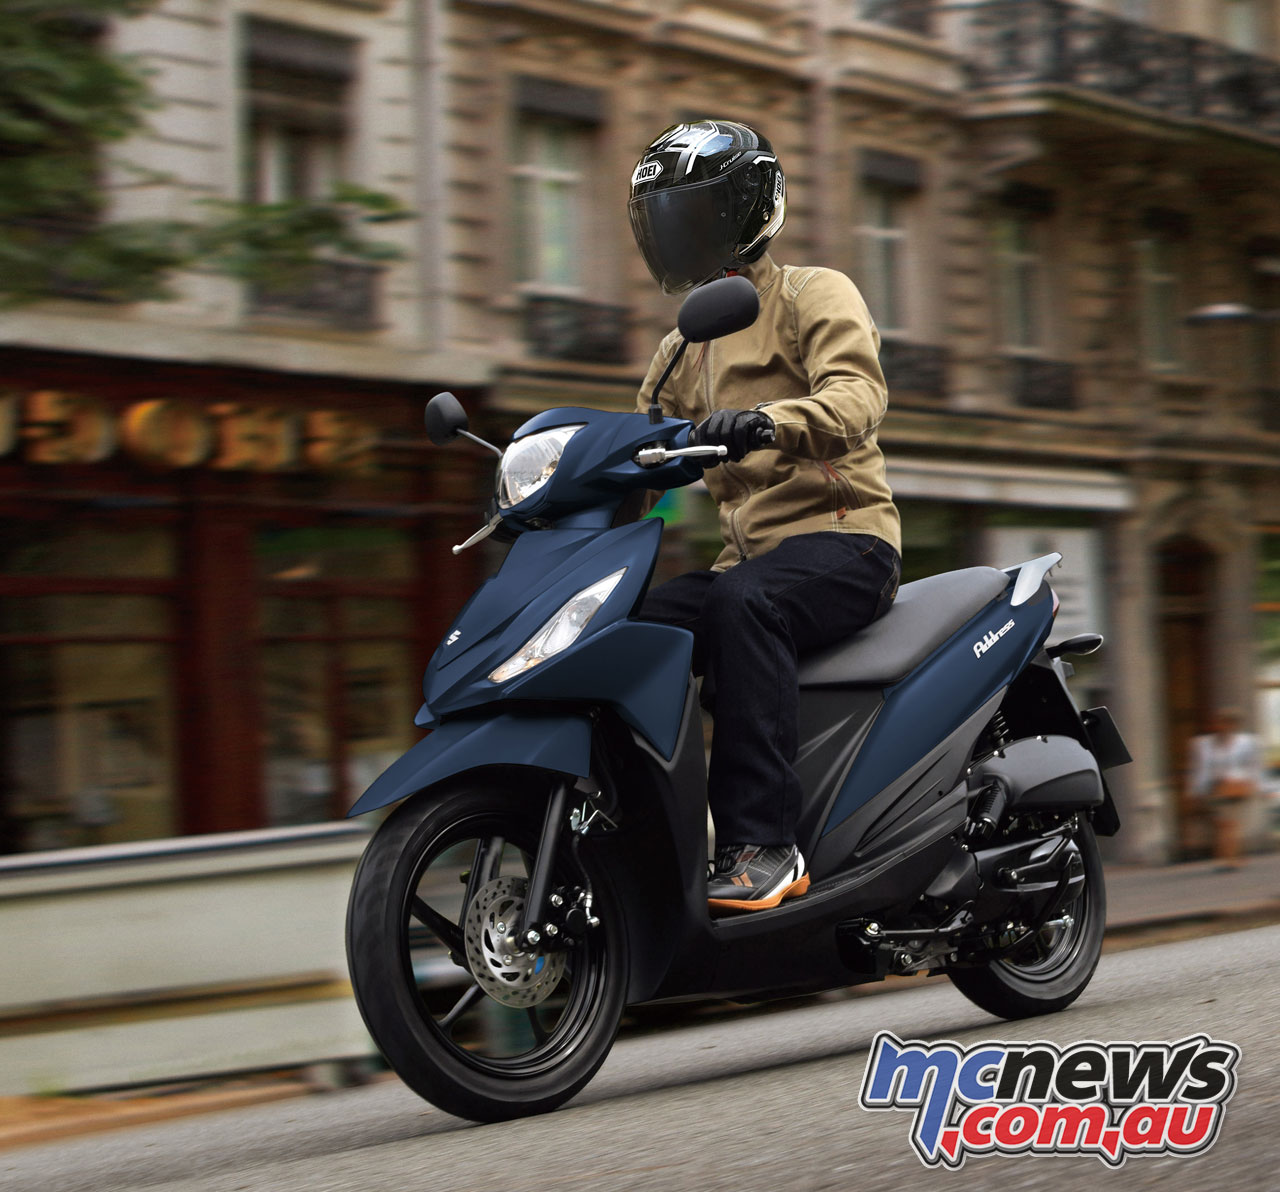 2020 Suzuki Address 110 arrives for $3,590 Ride Away | MCNews